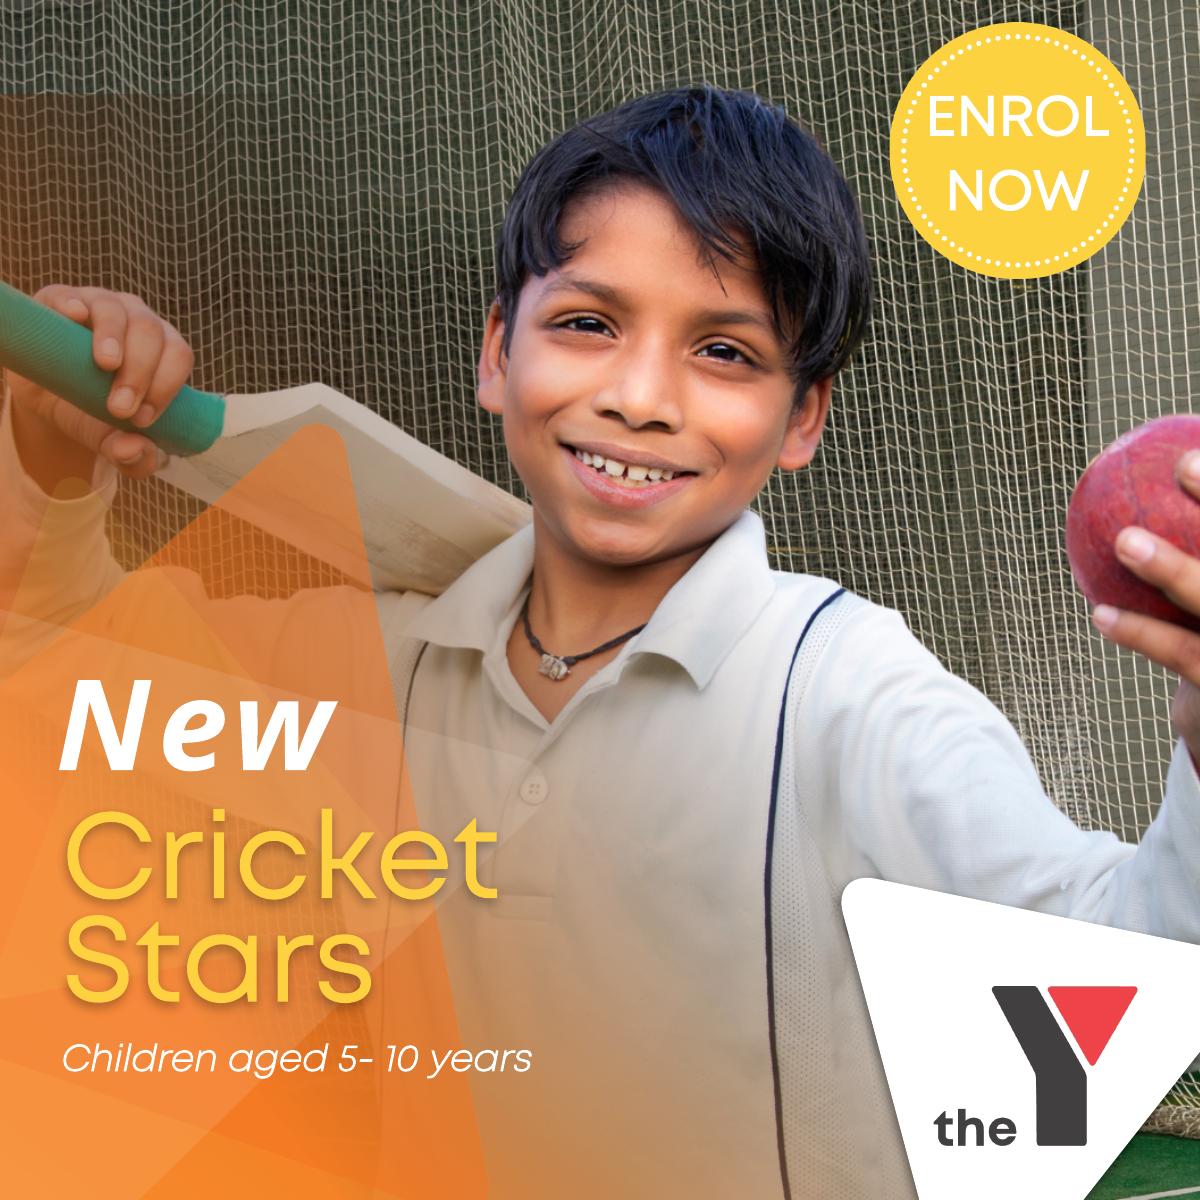 New Cricket Stars Children aged 5 - 10 years Enrol now